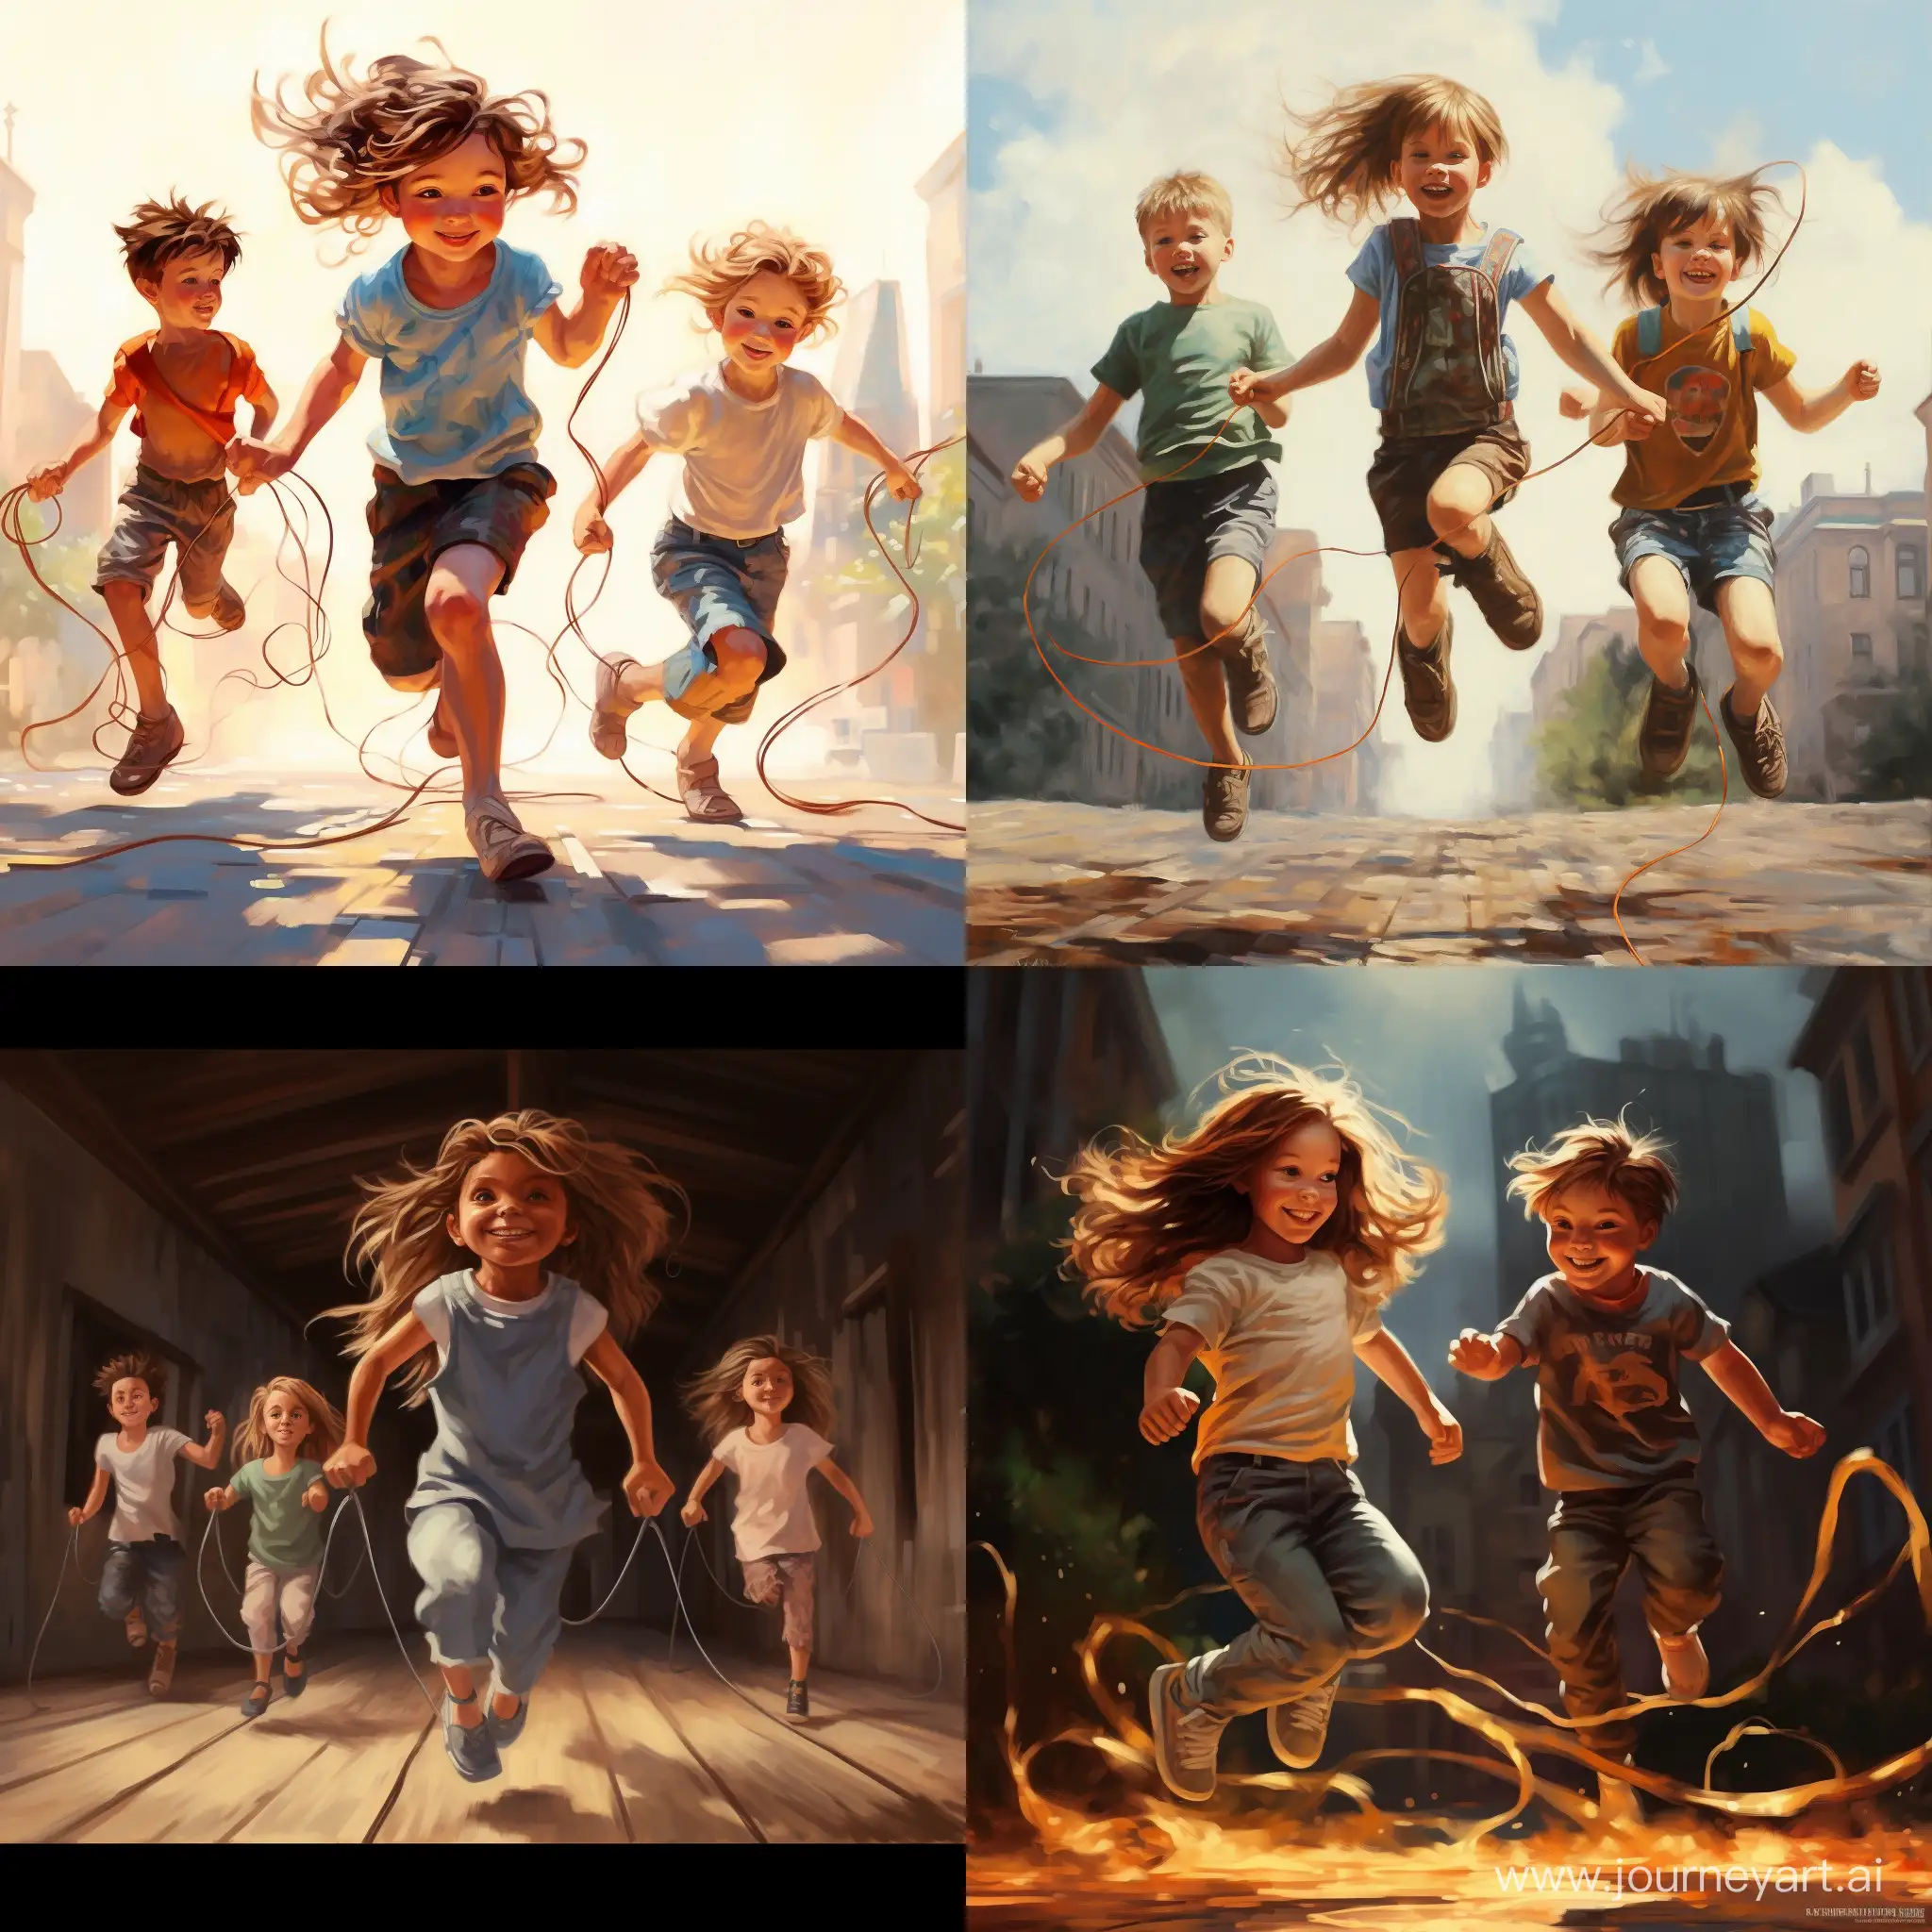 Joyful-Children-Jumping-with-a-Jump-Rope